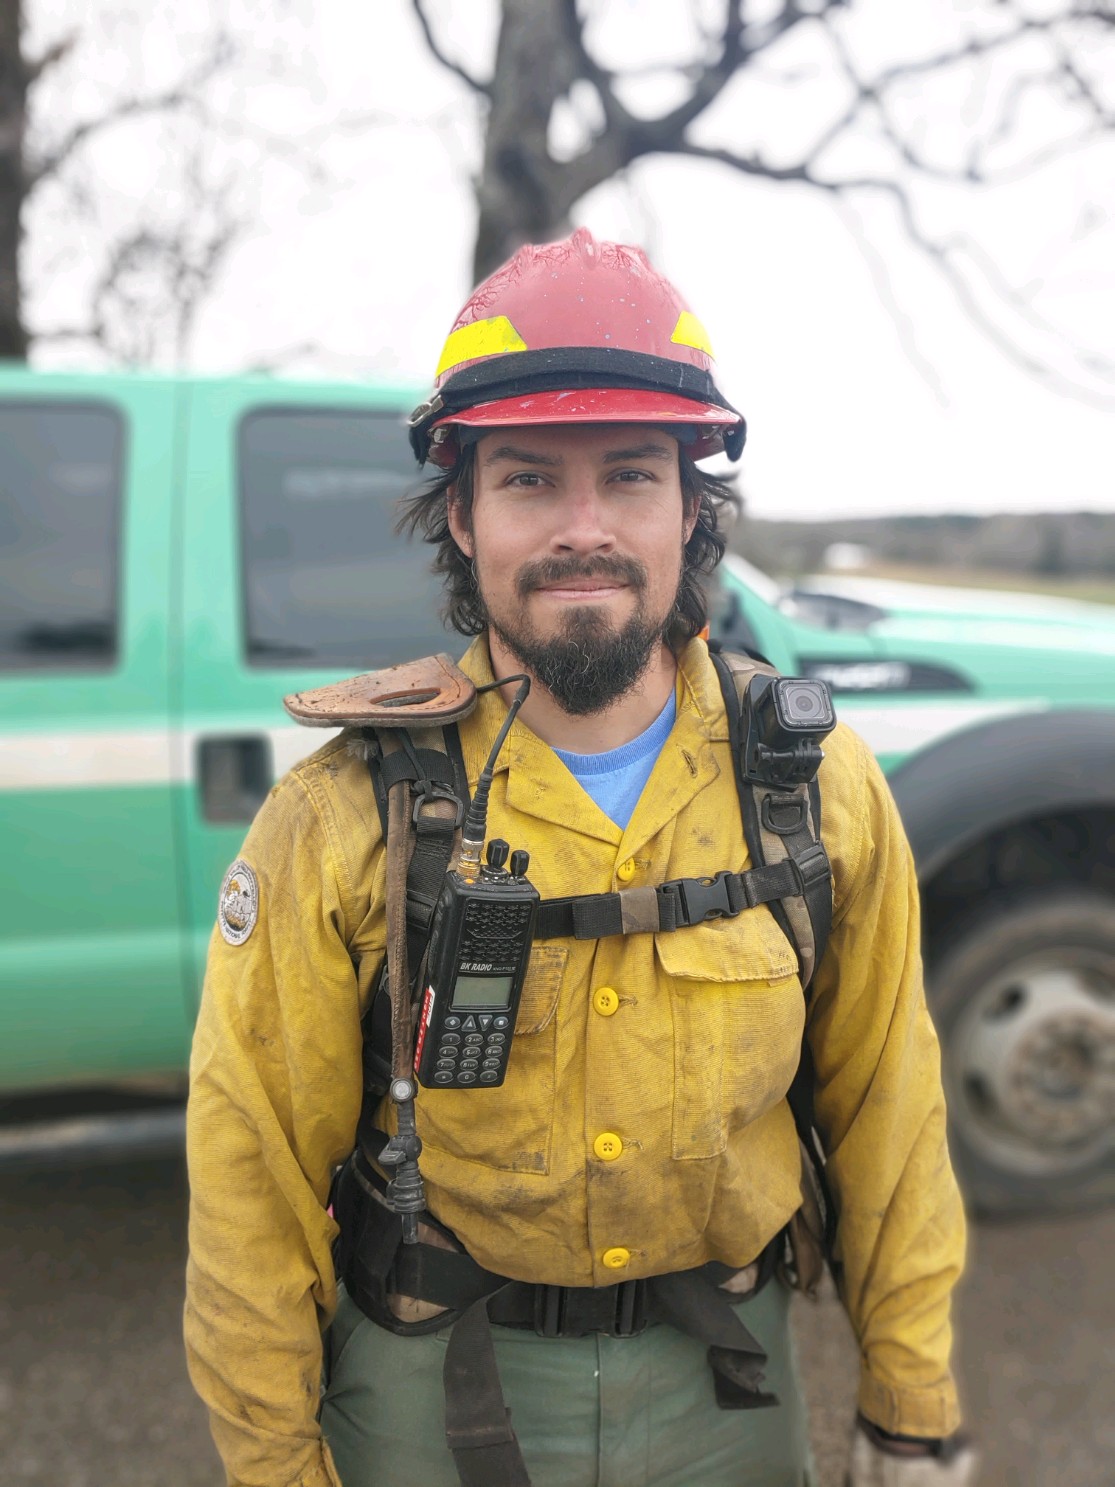 Senior wildland firefighter Anthony “Monte” Monterroso